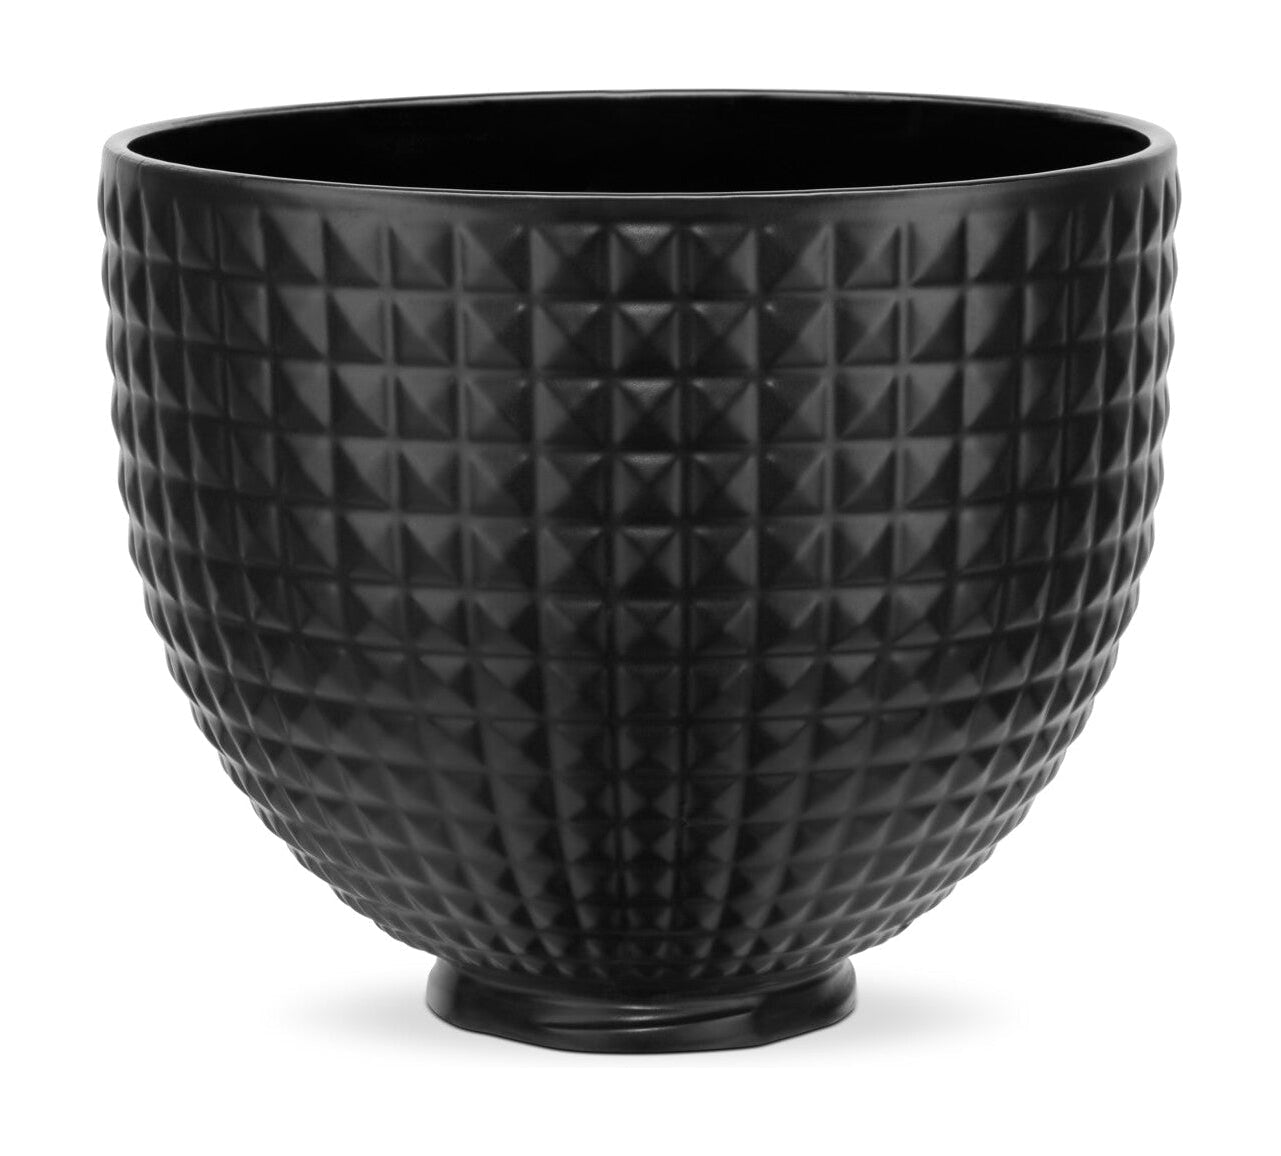 Kökhjälp Ceramic Bowl 4,7 L, Black Studded